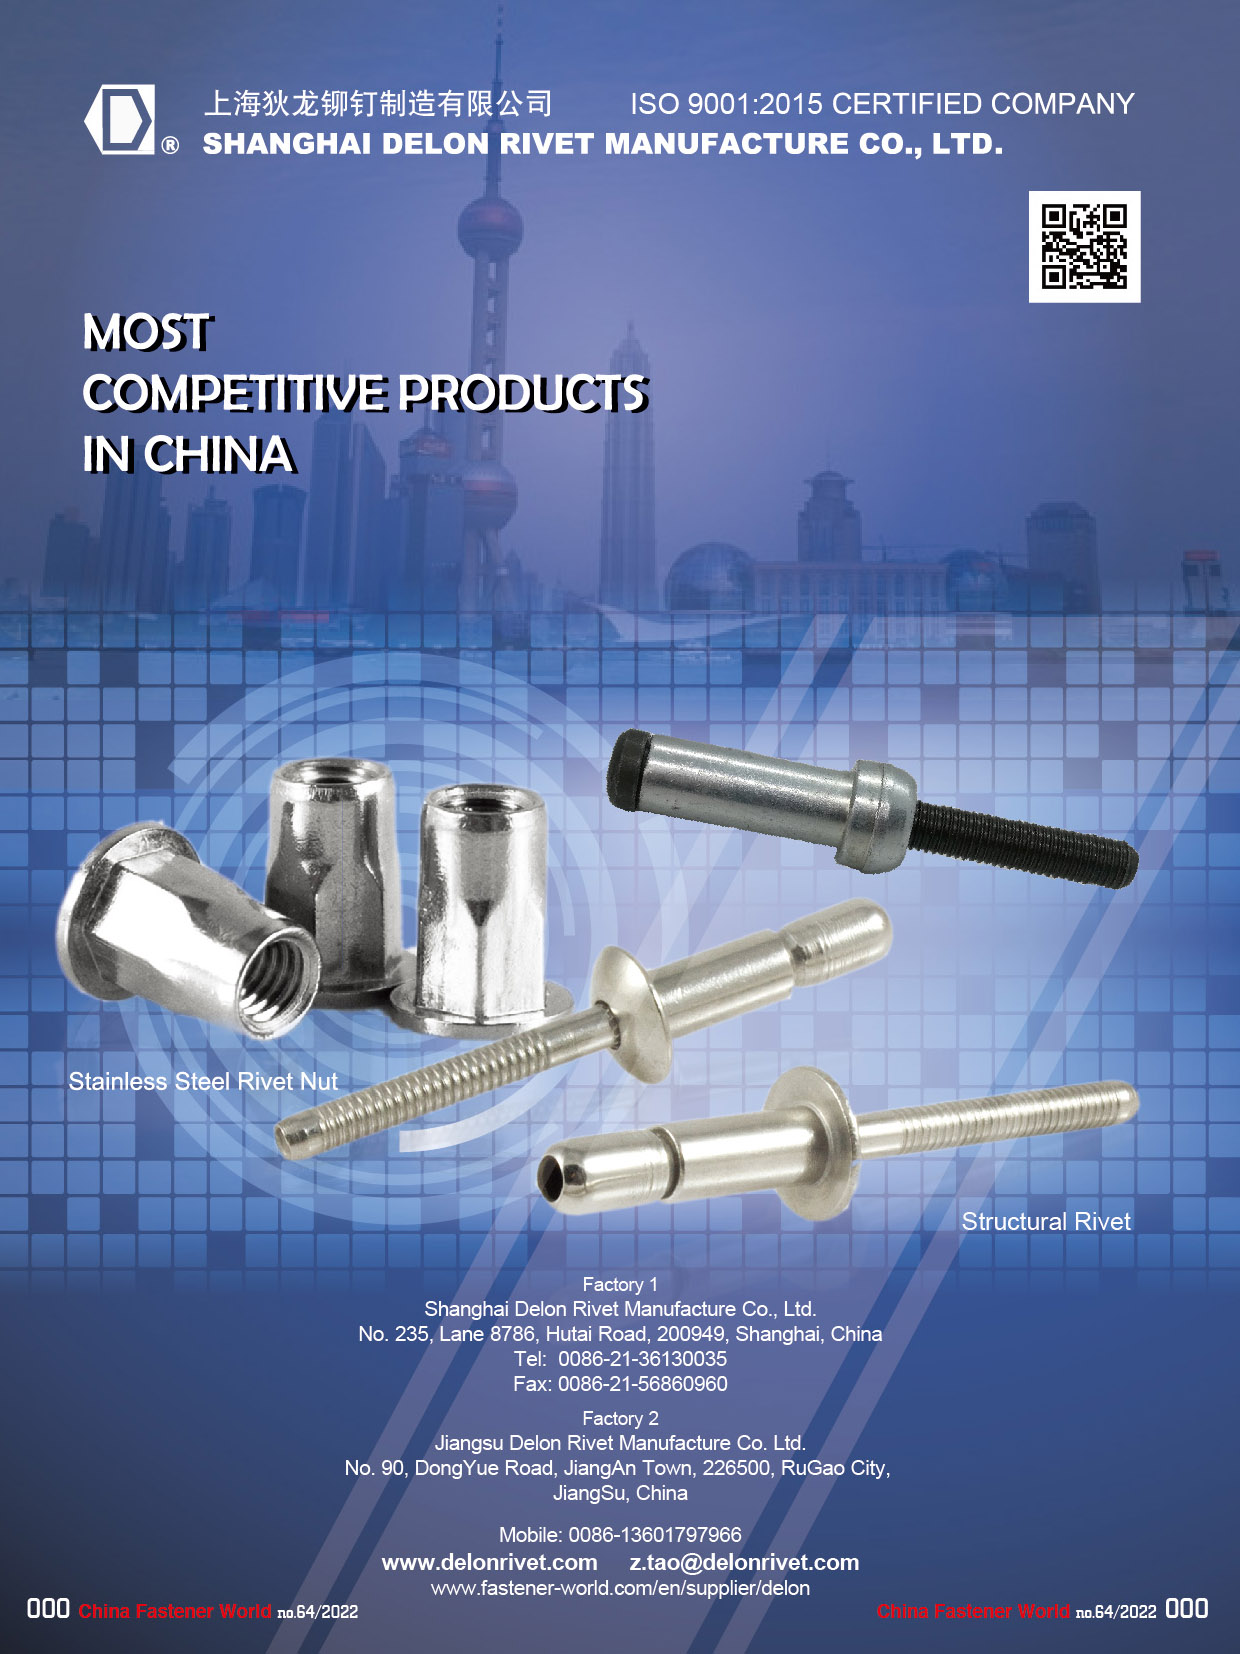 SHANGHAI DELON RIVET MANUFACTURE CO., LTD. , Stainless Steel Rivet Nut, Structure Rivet , Structural Rivets